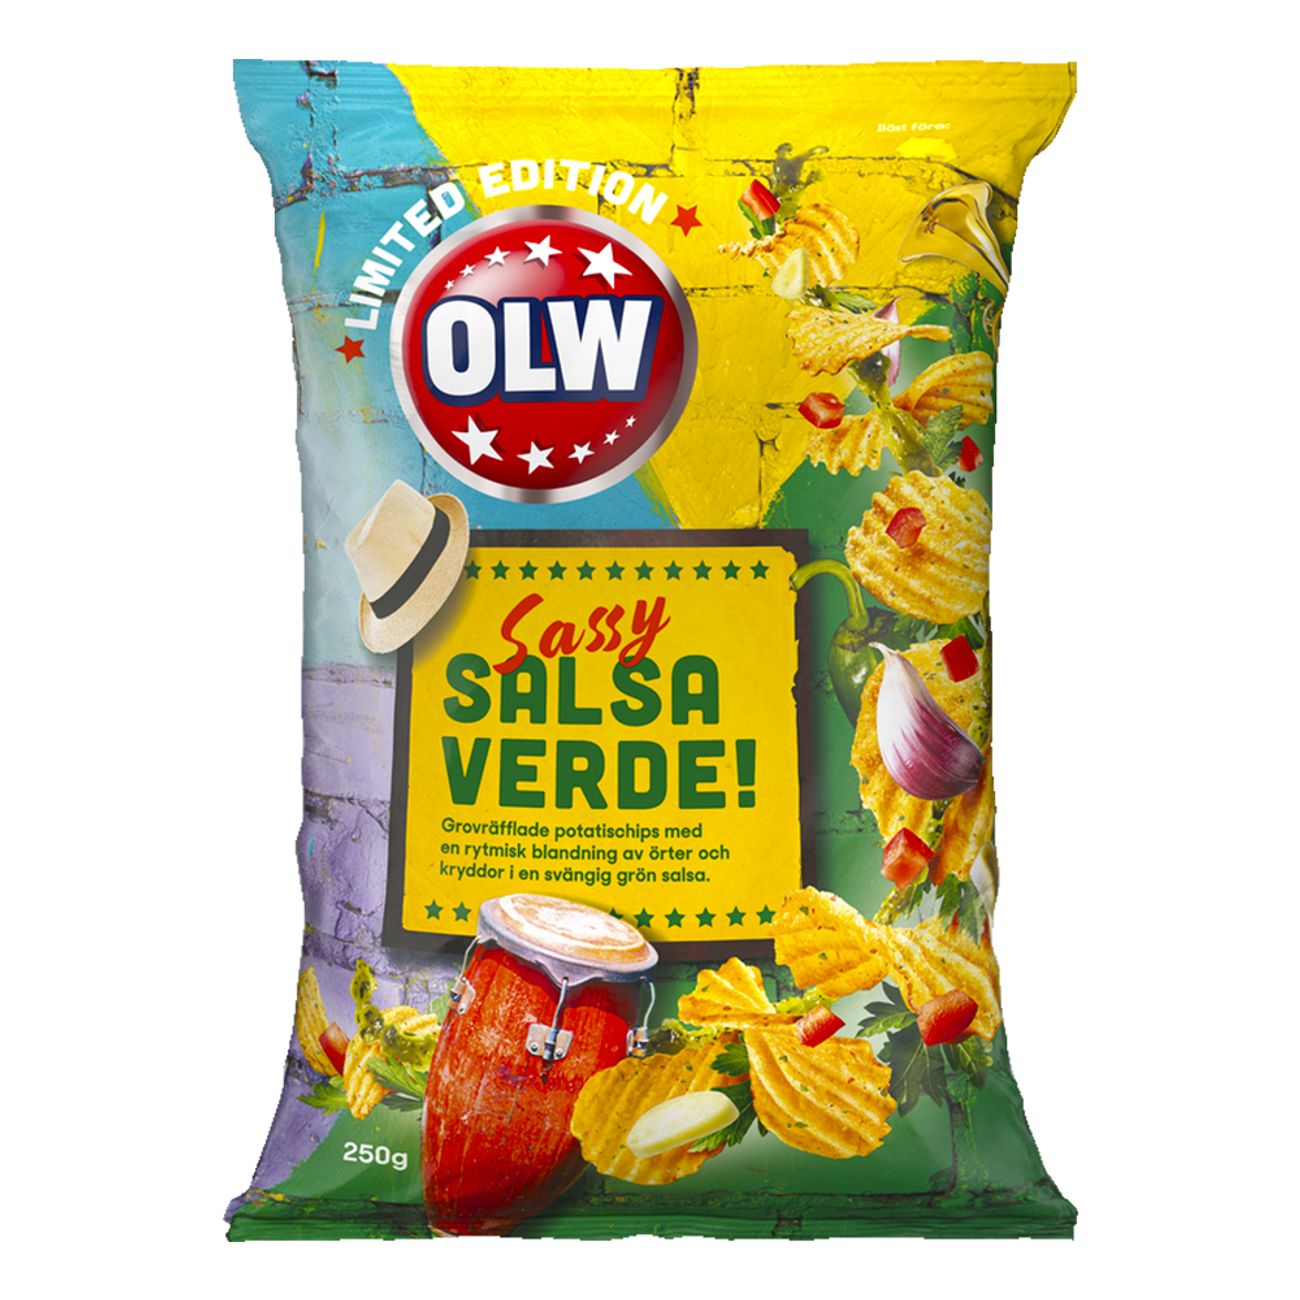 olw-sassy-salsa-verde-82520-2